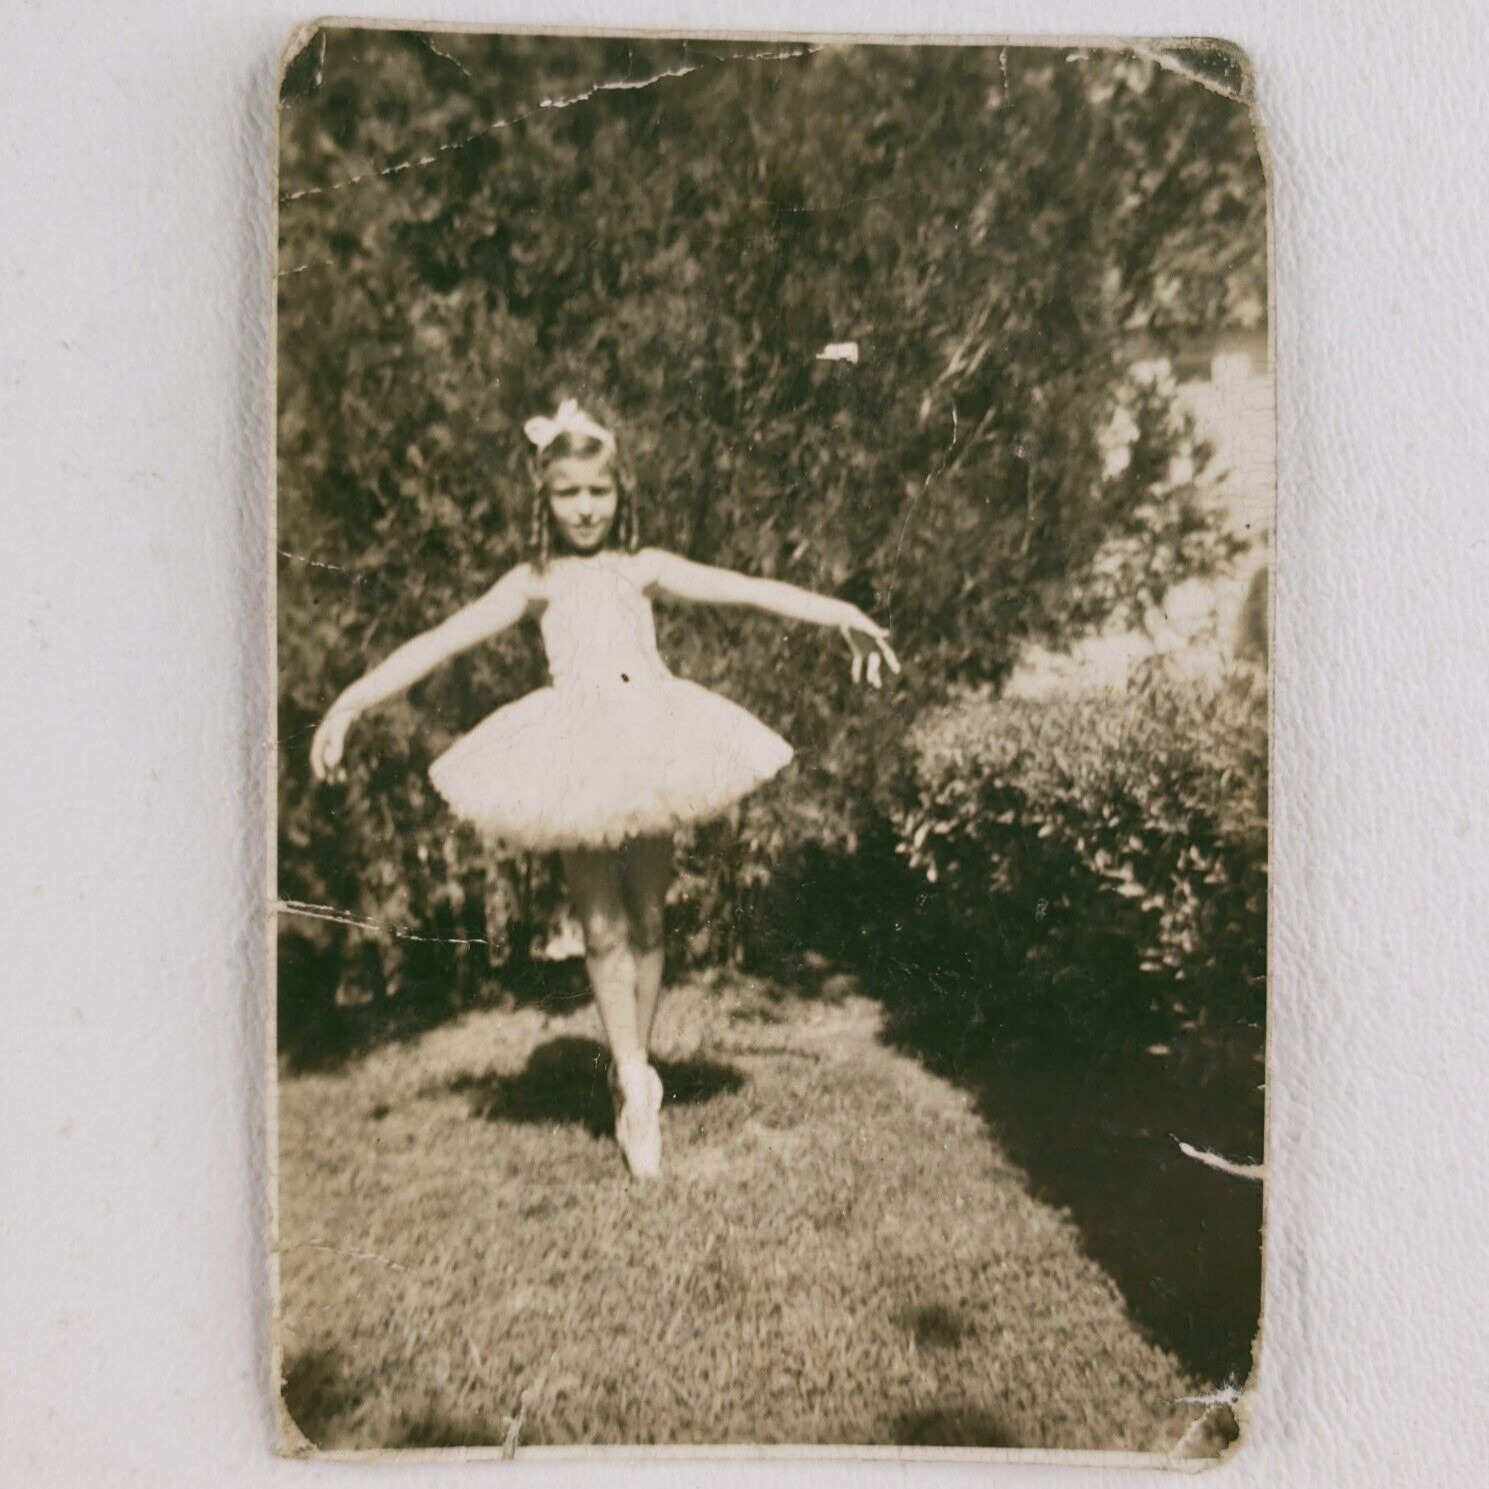 Kansas City Ballerina Girl Photo 1930s Vintage Original Child Ballet Dance A1228